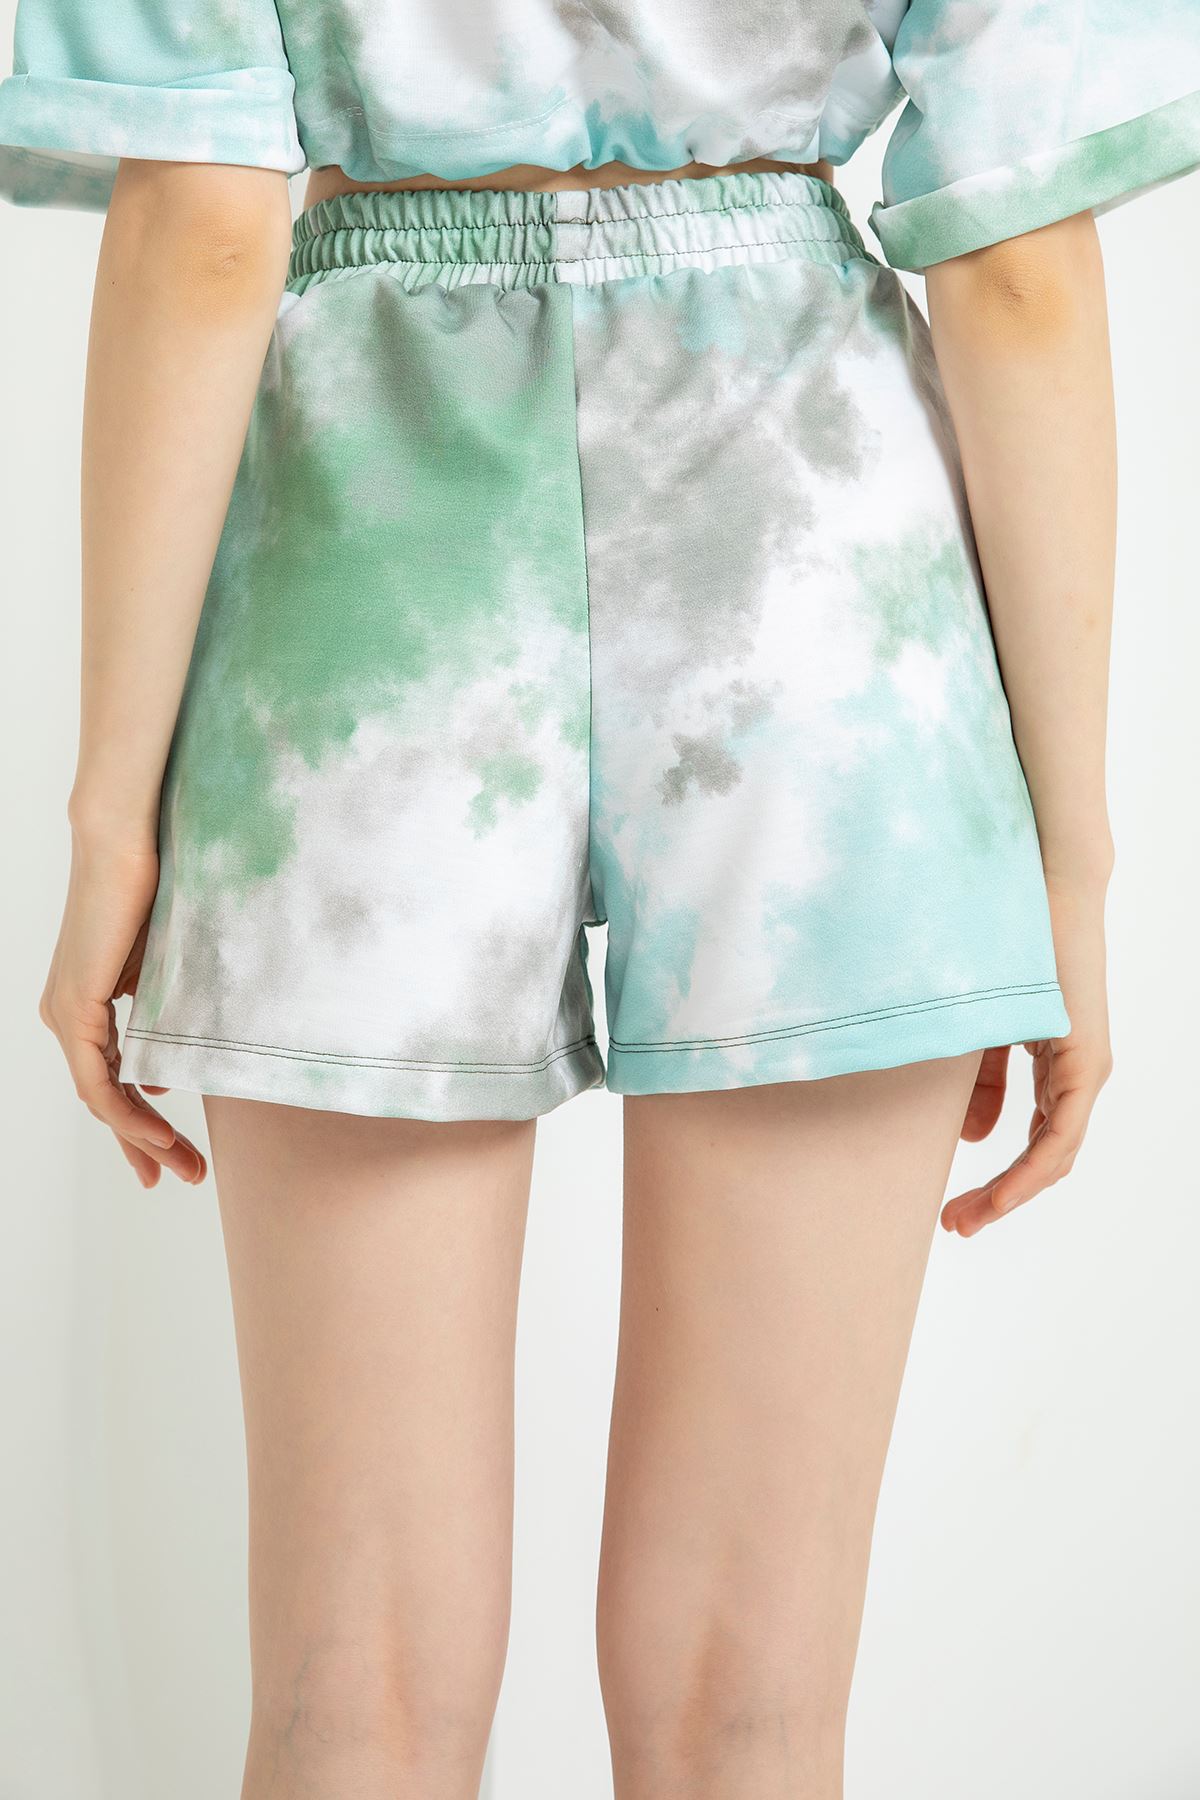 Double Knit Fabric Comfy Fit Cloud Print Women Shorts - Green